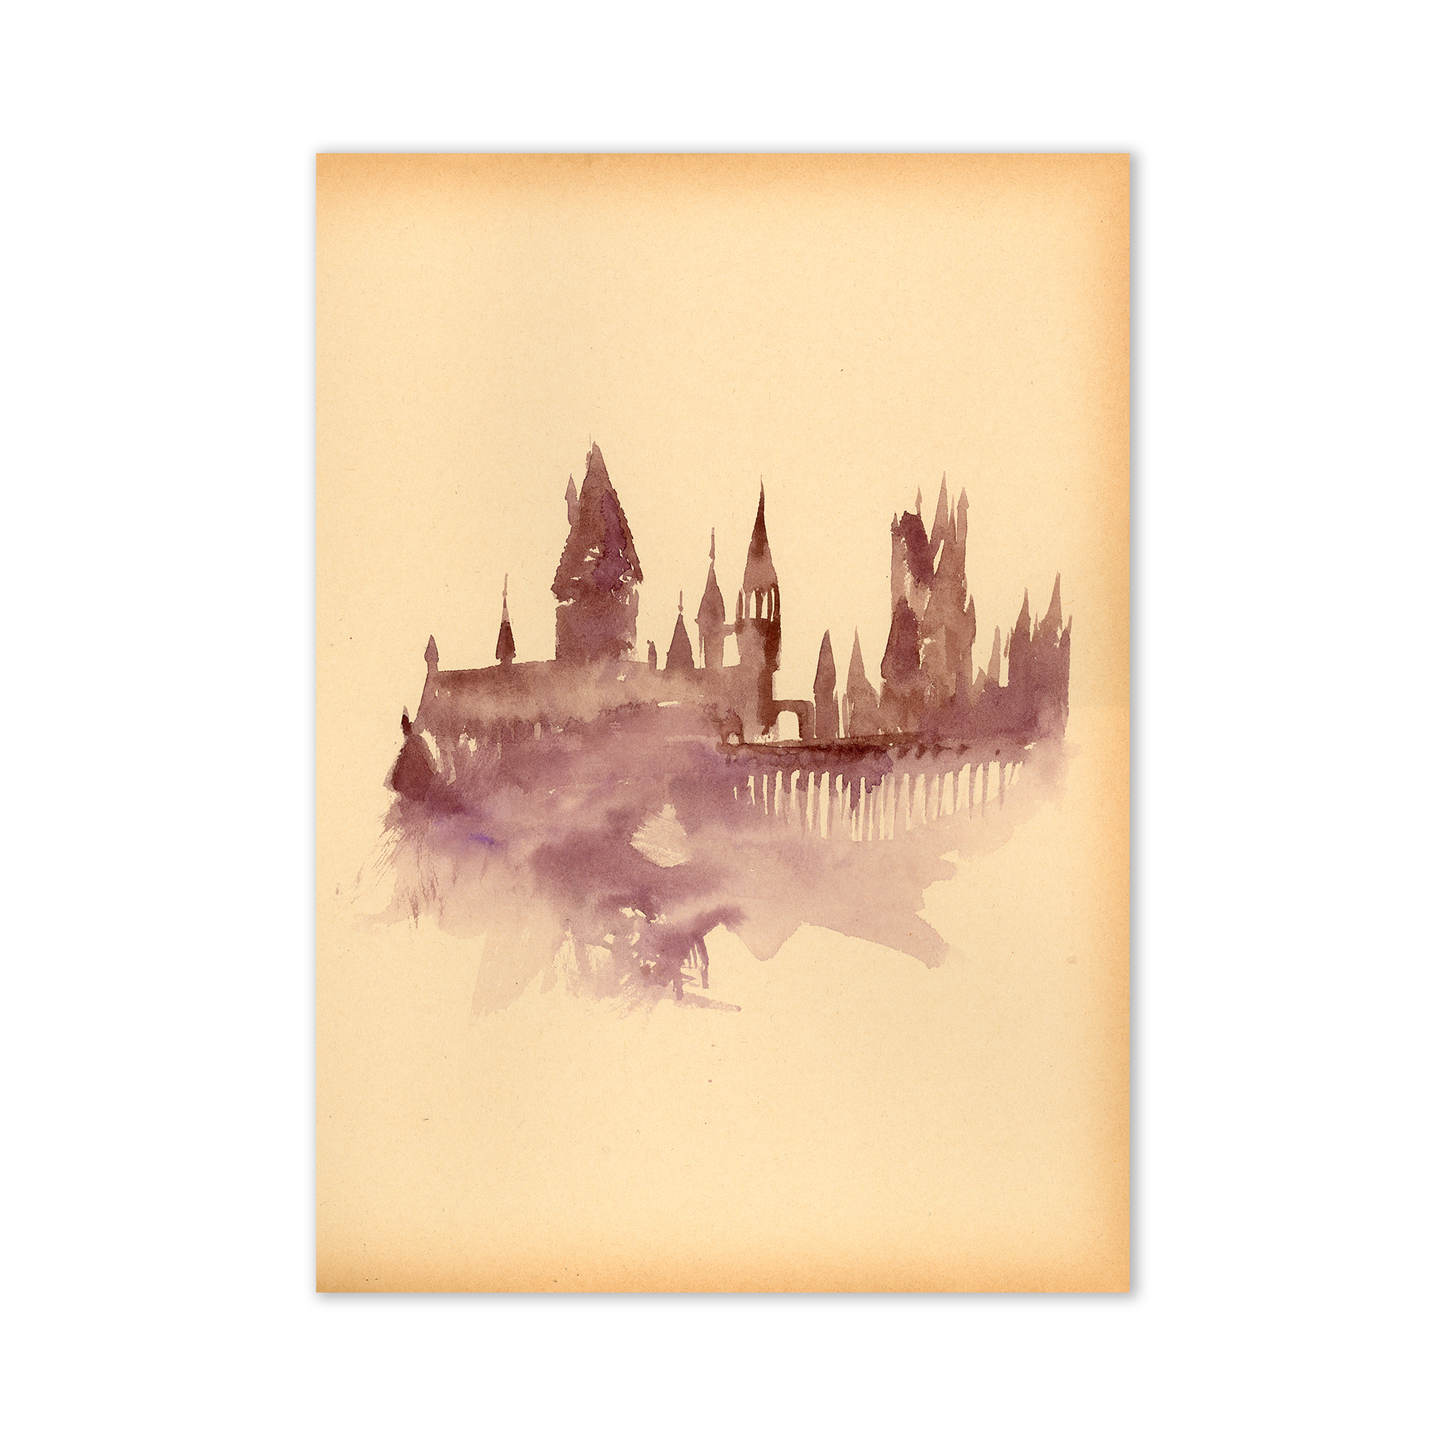 Muggle Sketches Bundle 1 - Set of 9 PRINTS 5x7